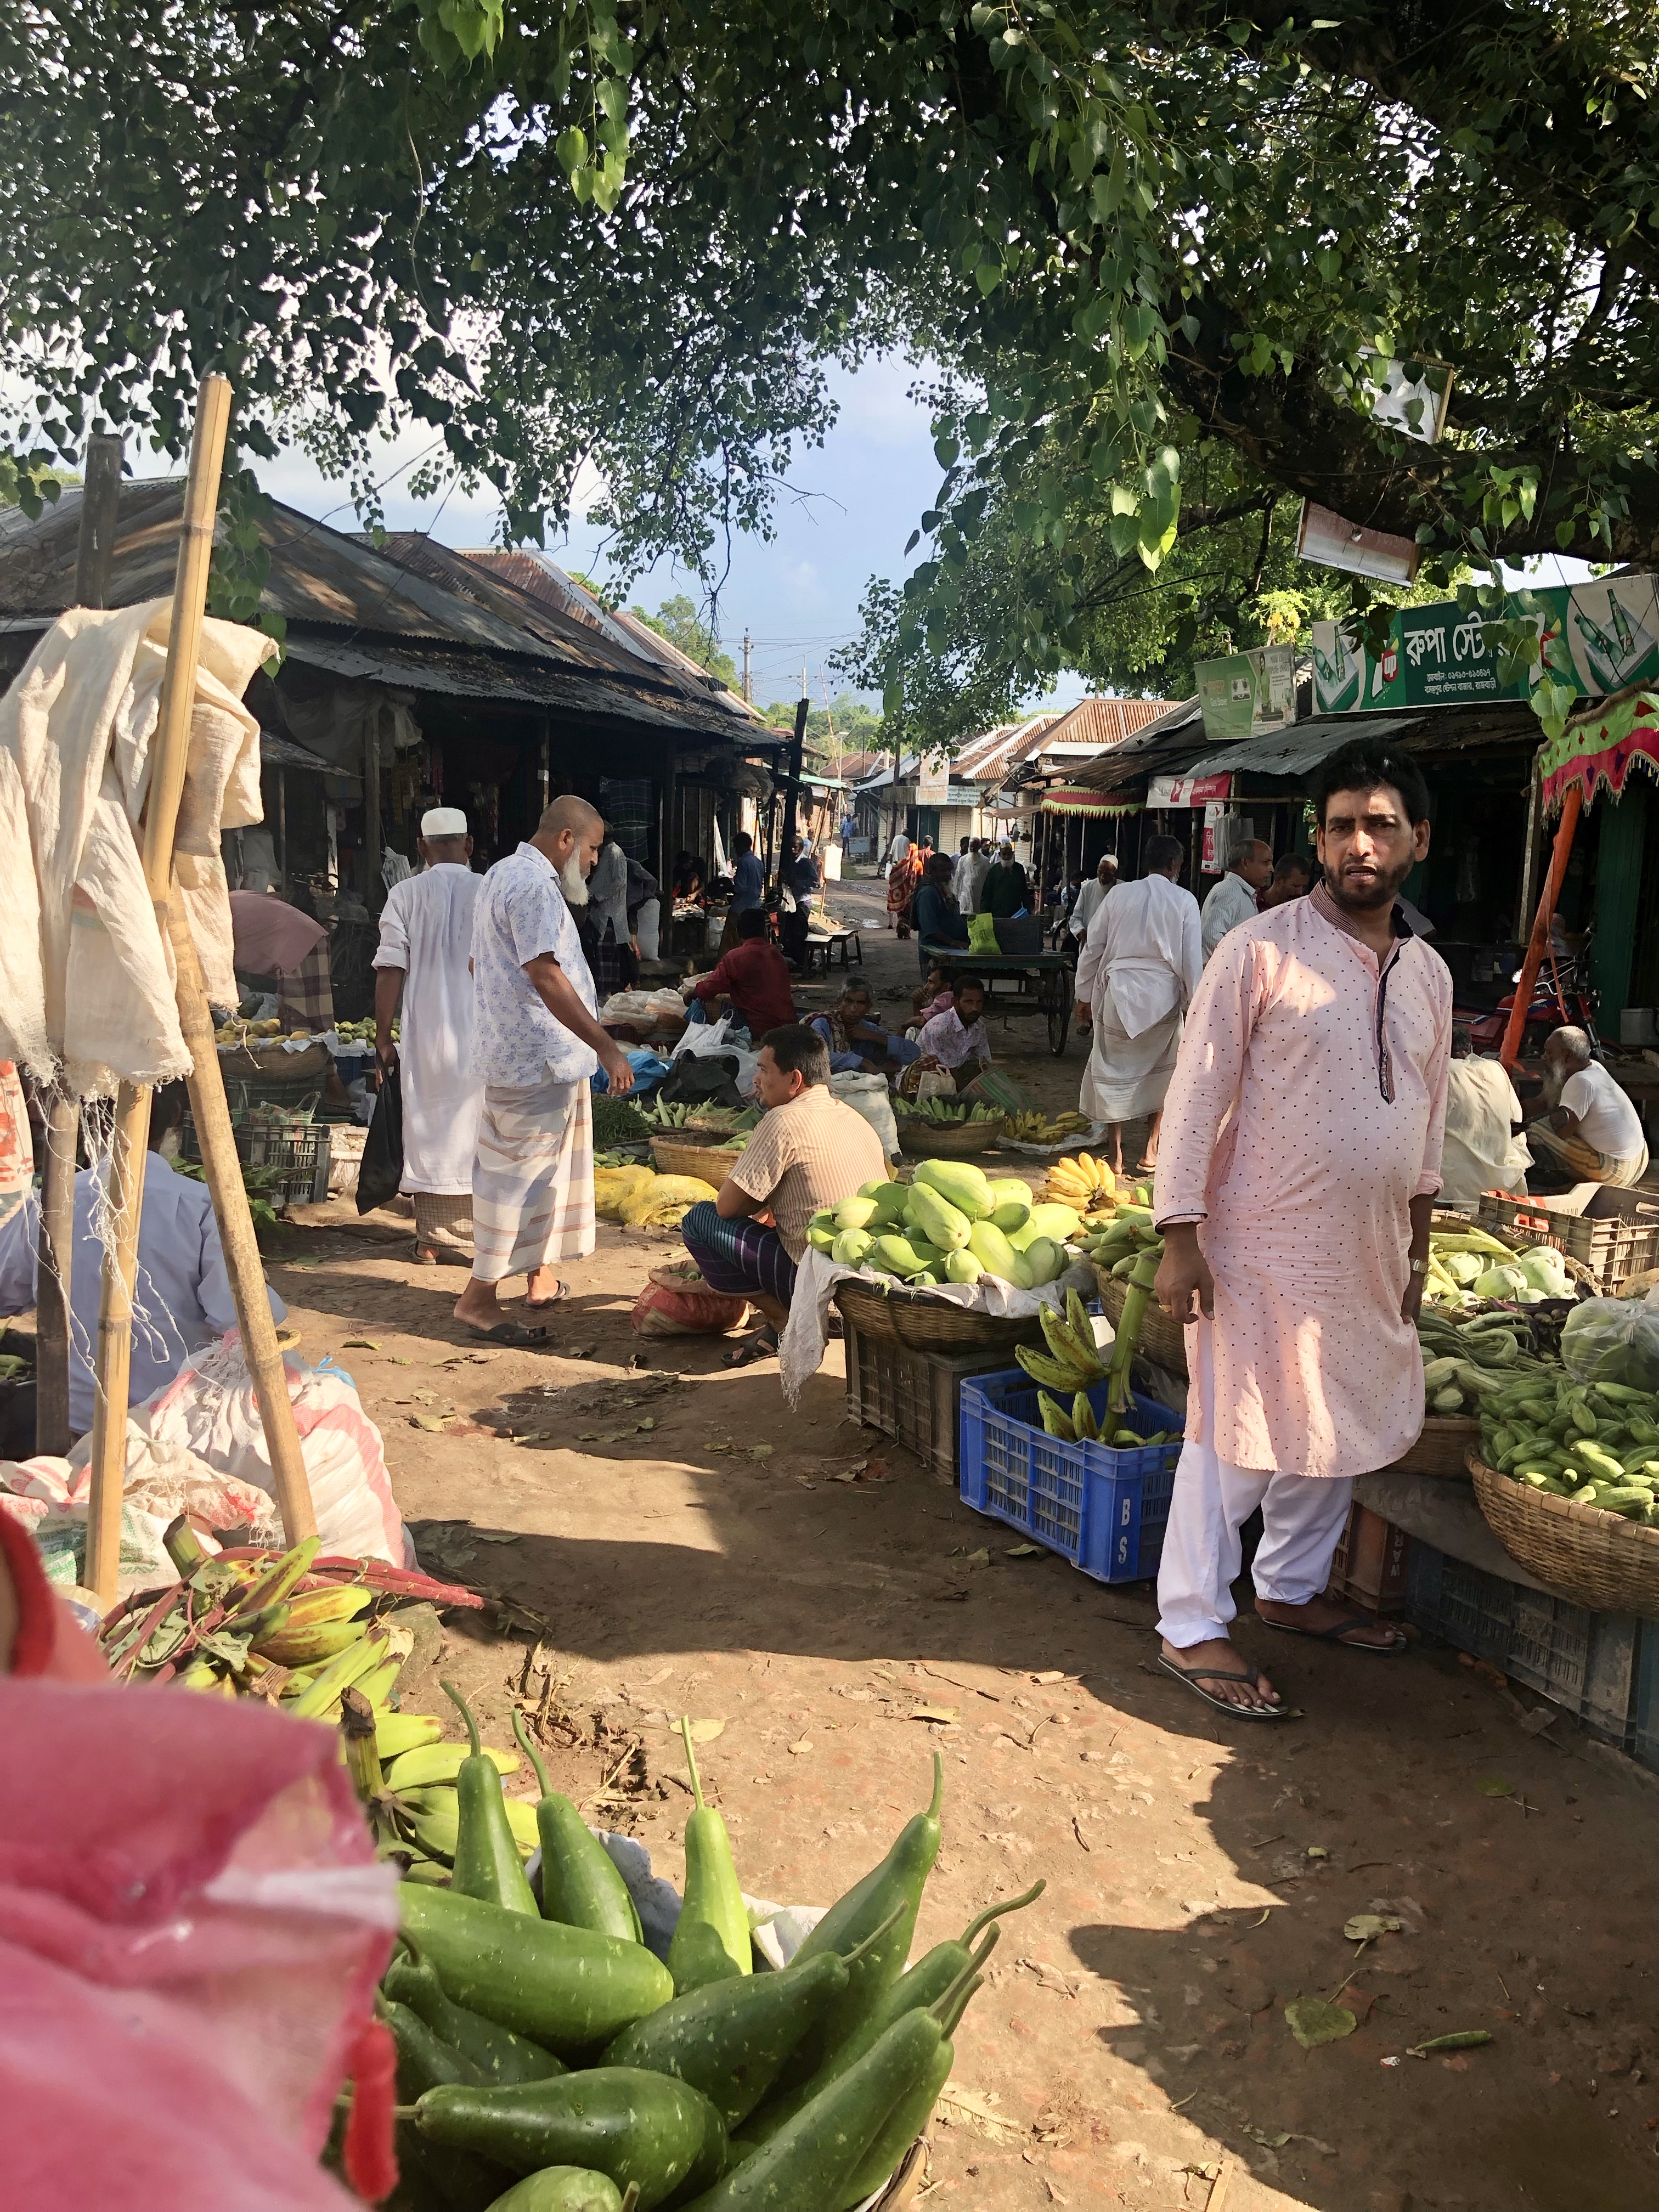 Stopping at the Market to Buy Bananas